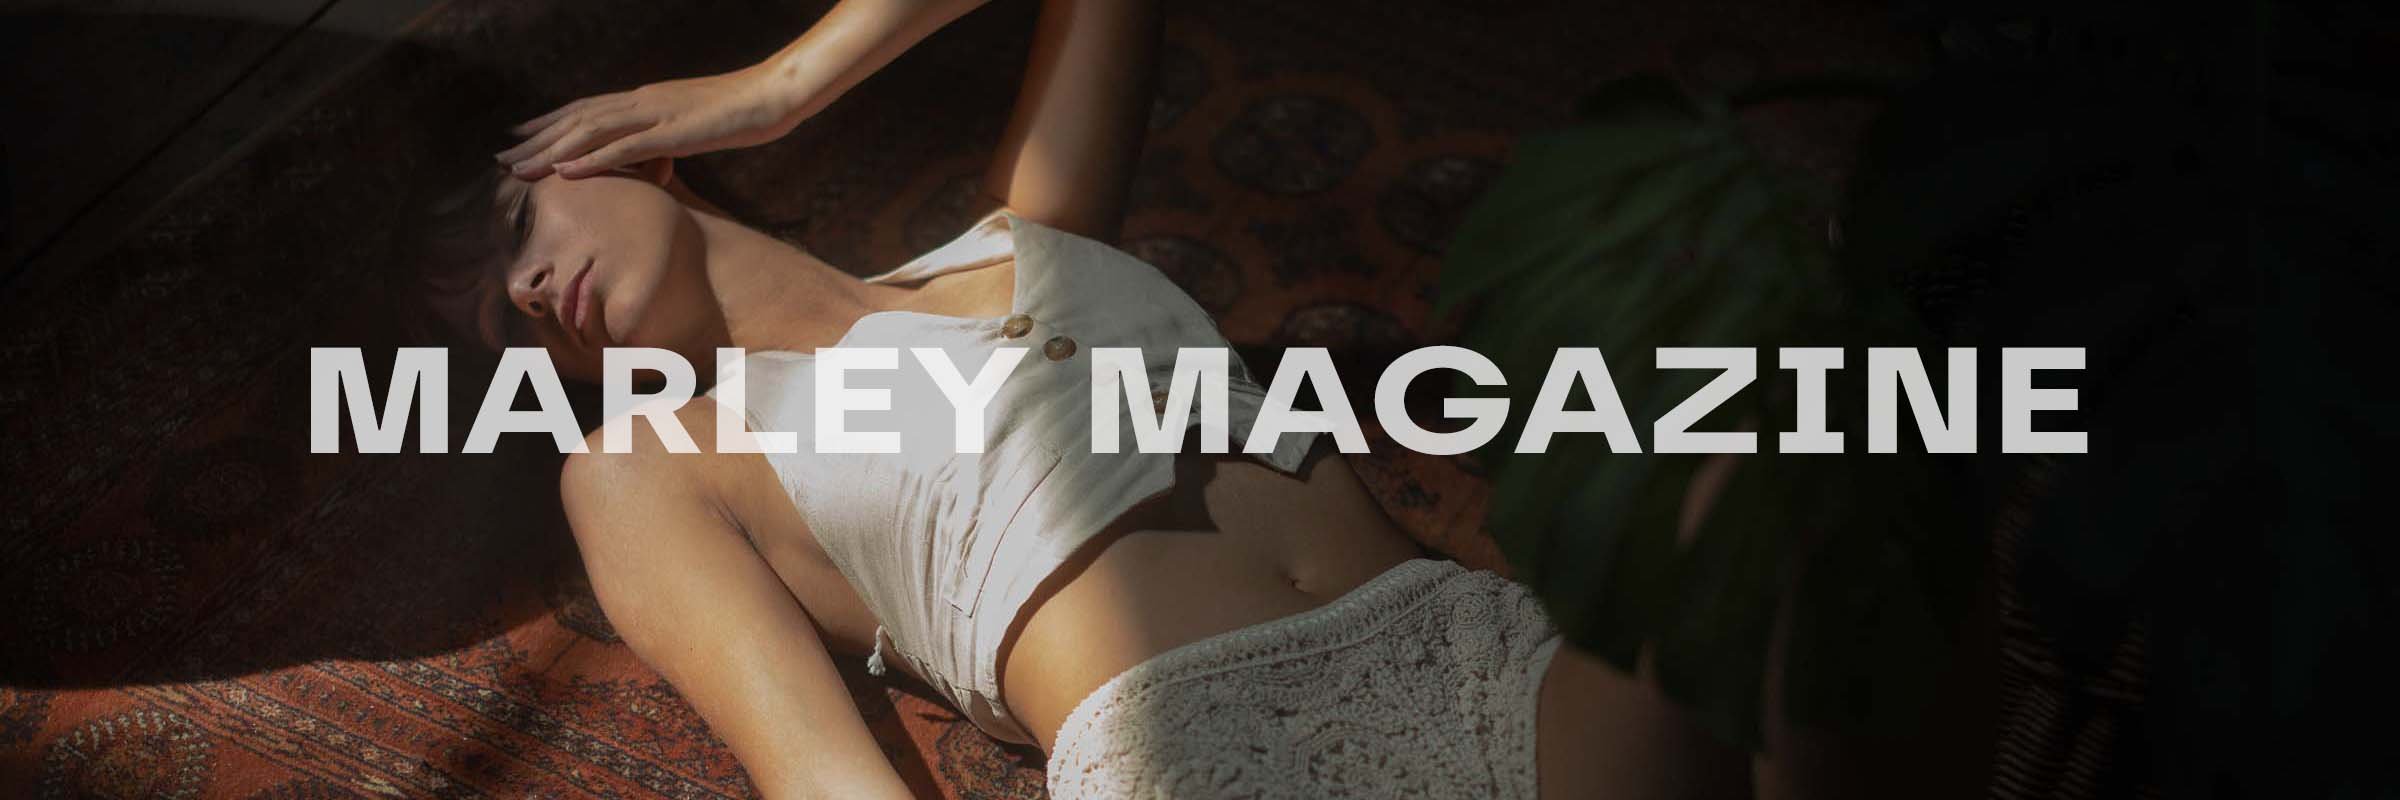 MARLEY Magazine - Banner 1_0002_MARLEY MAGAZINE.jpg